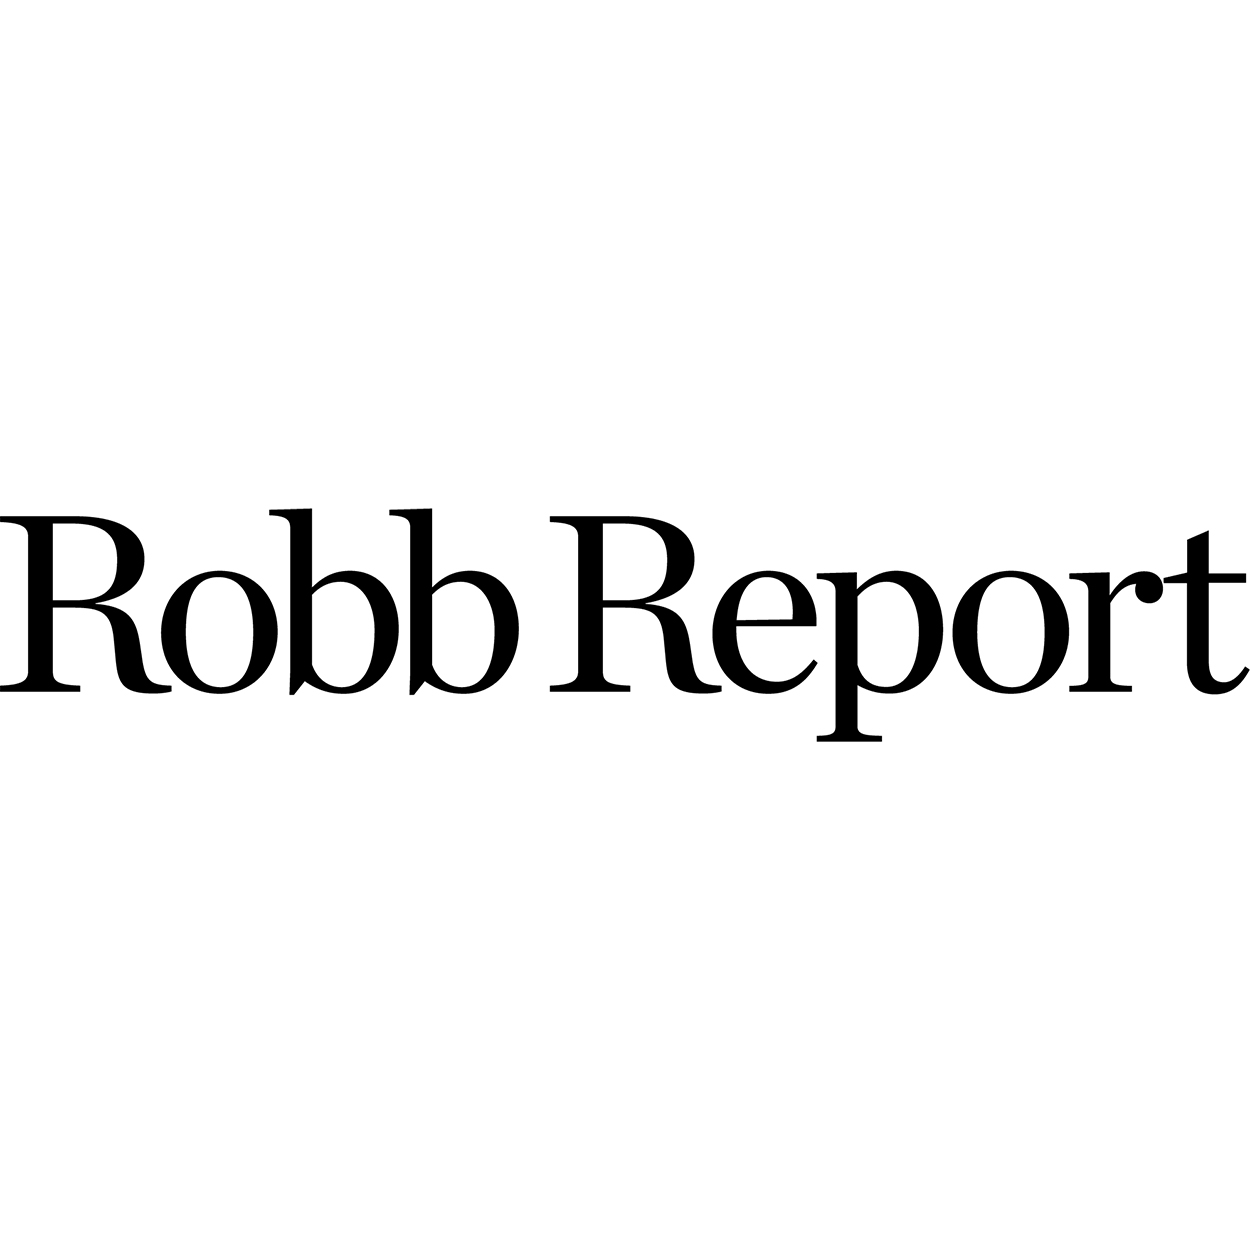 ROBB REPORT